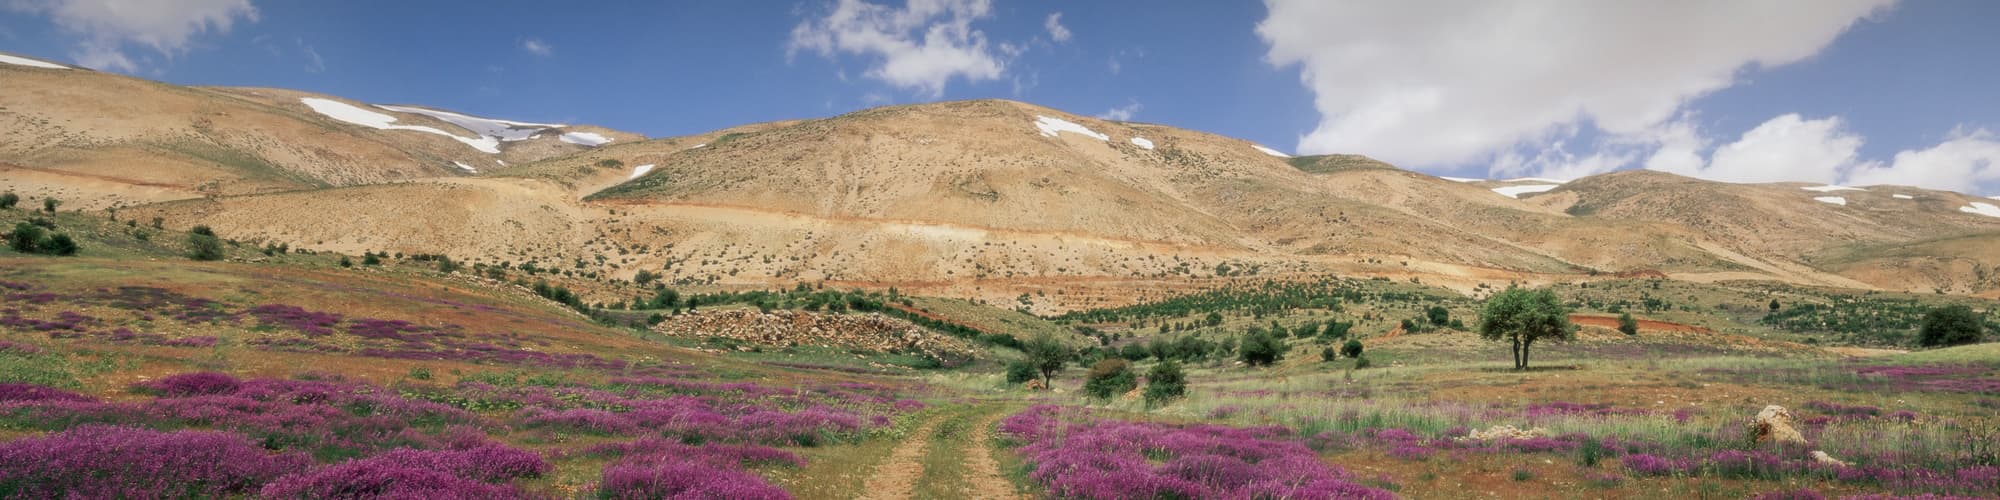 Trek au Liban : circuit, randonnée et voyage © robertharding / Adobe Stock